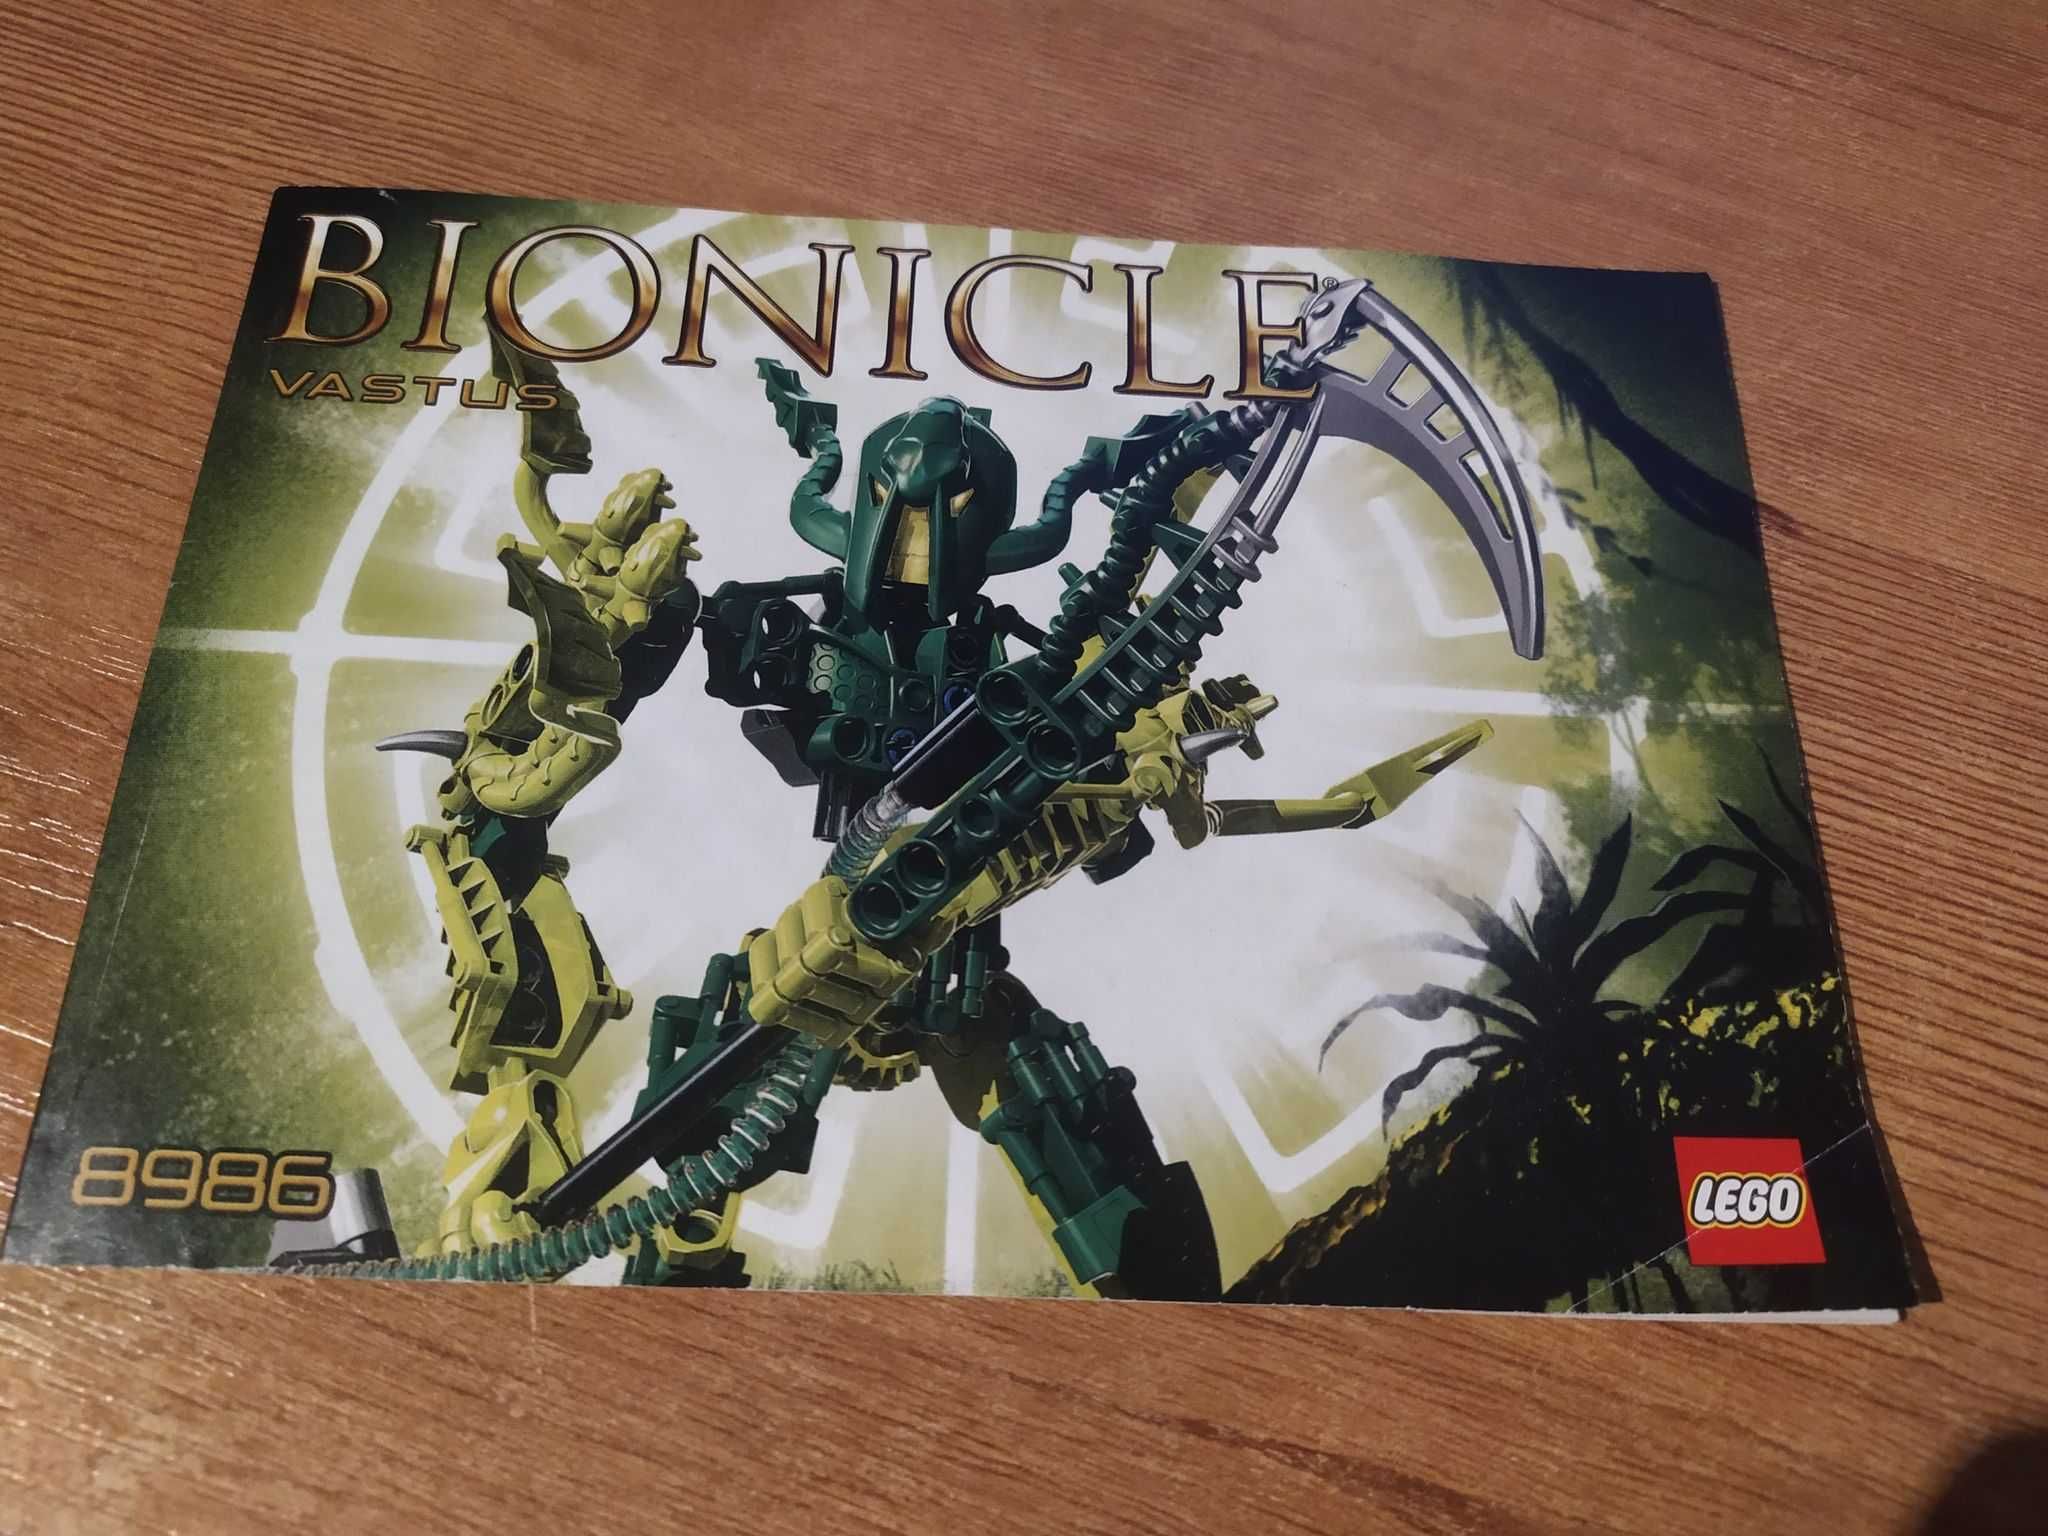 Lego Bionicle 8986 Vastus instrukcja